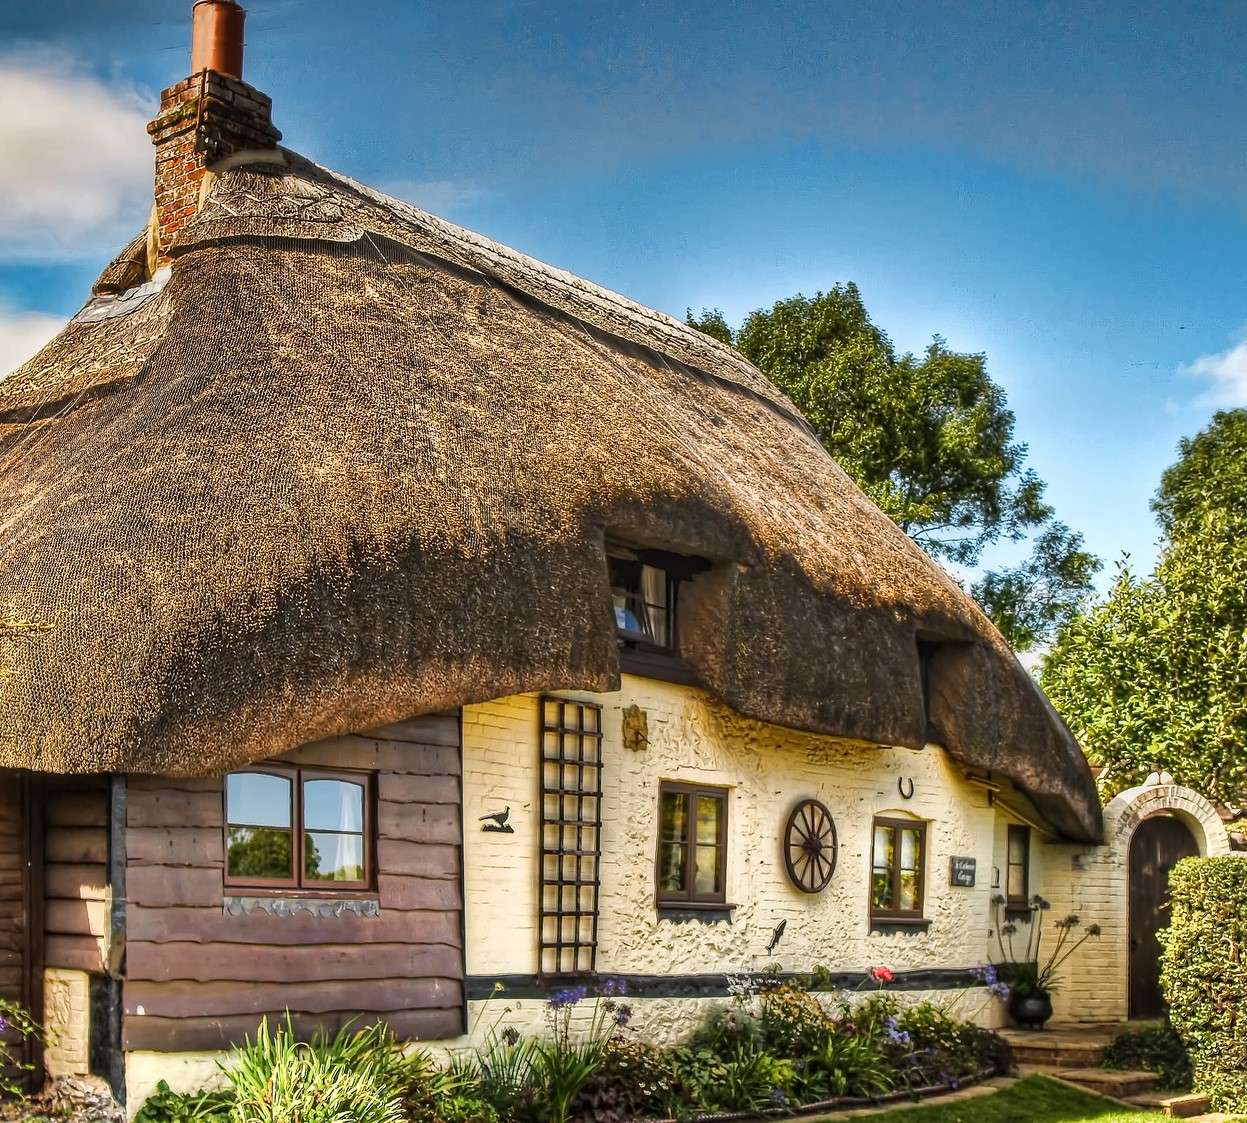 Huisje met rieten dak in het dorp Longstock legpuzzel online